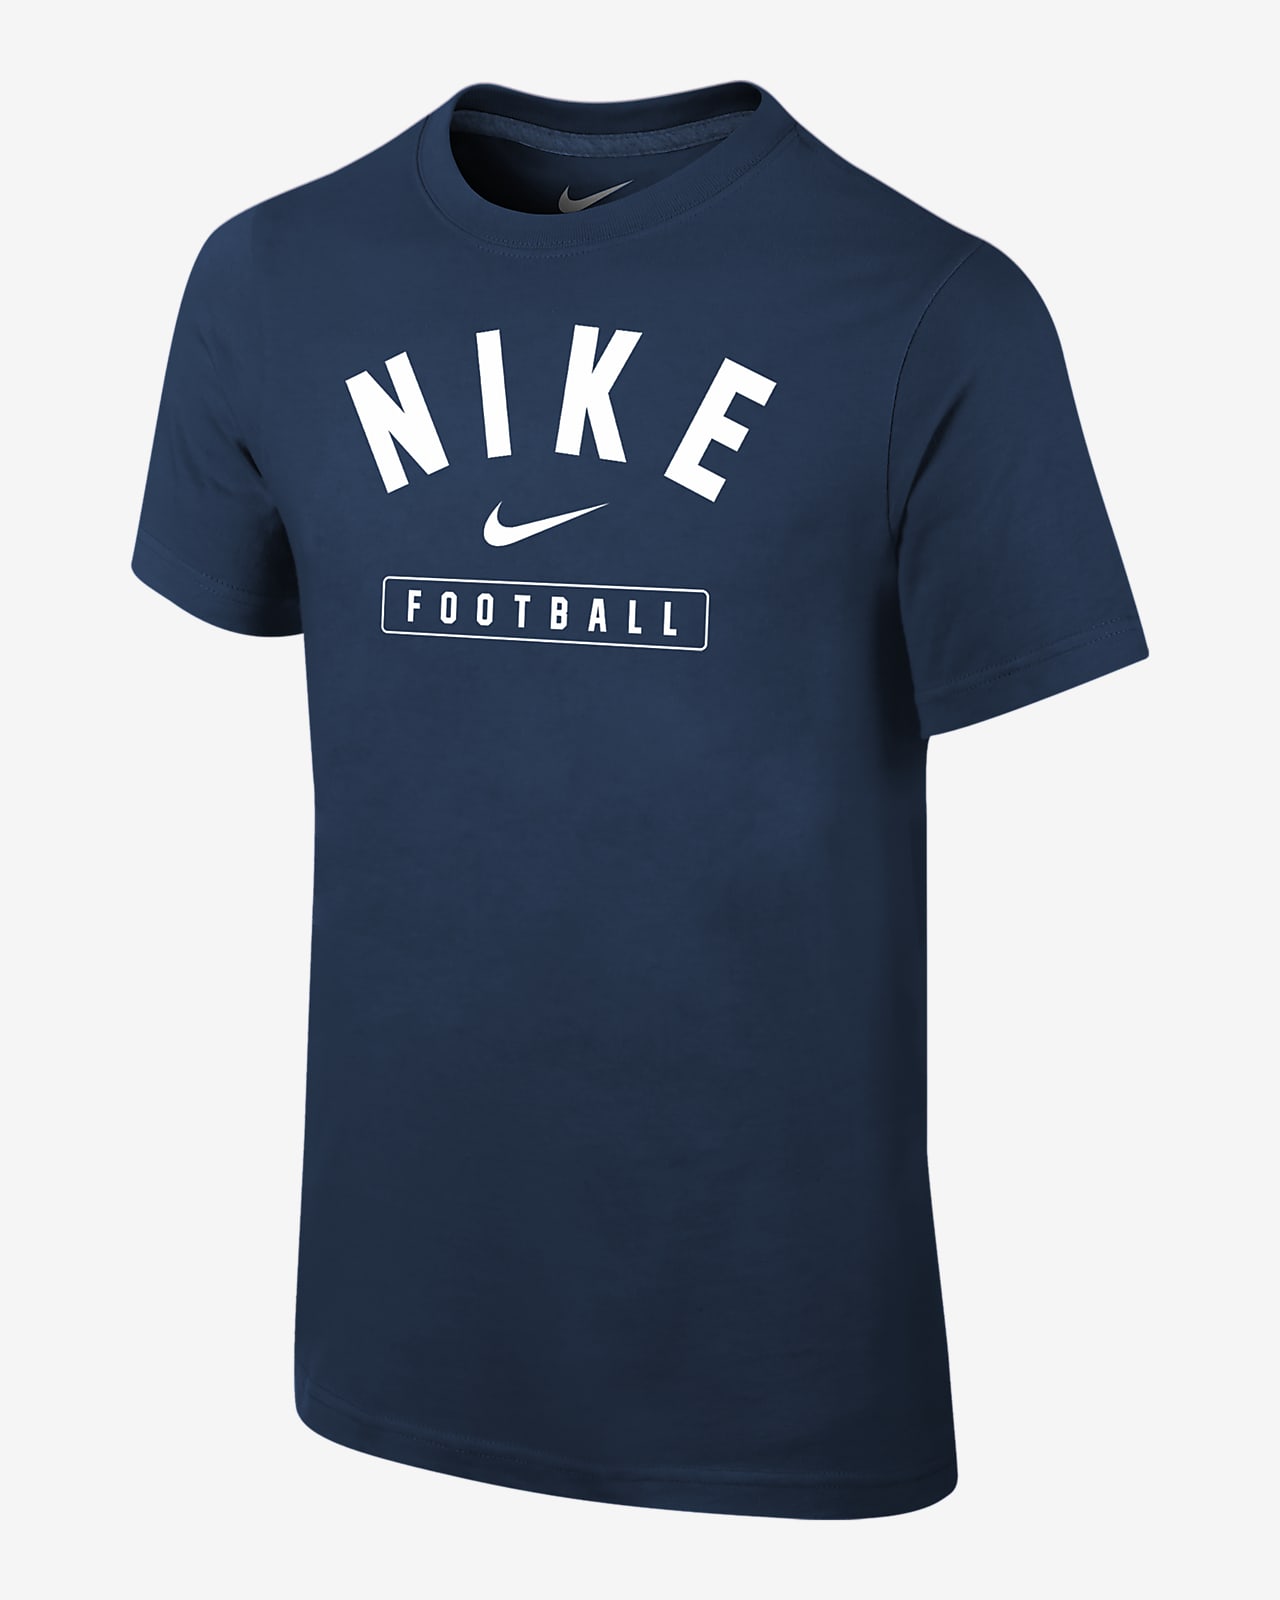 Nike Football Big Kids' (Boys') T-Shirt